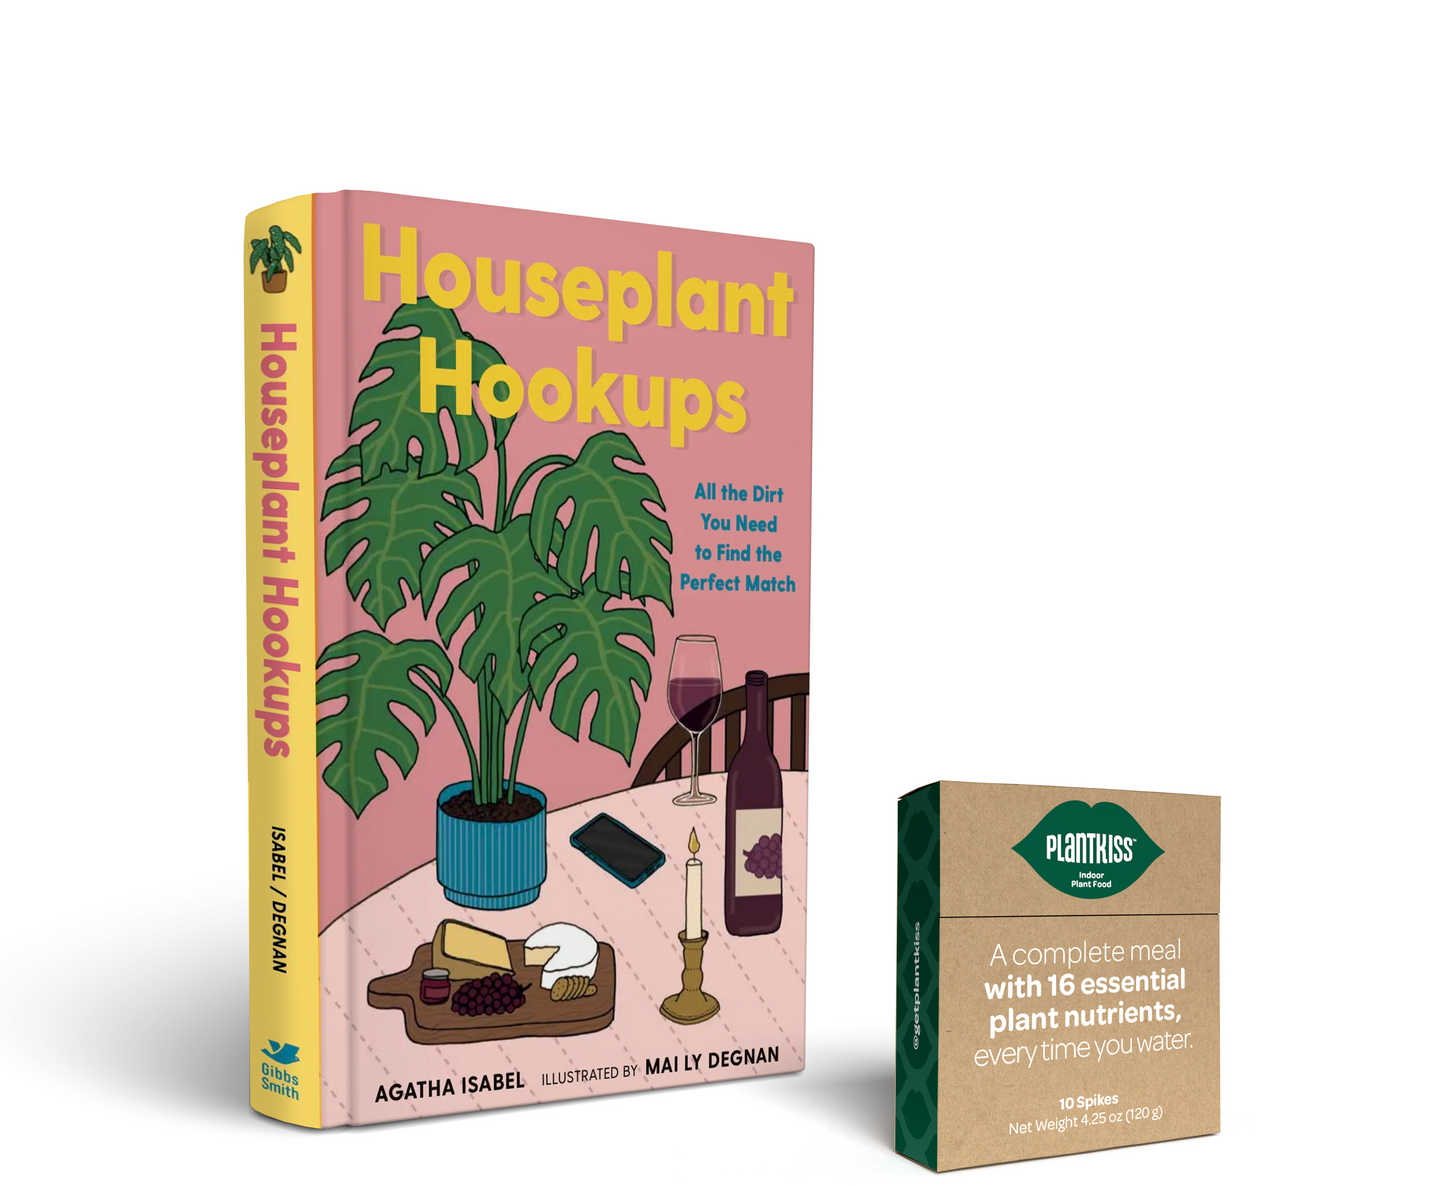 Houseplant Hookups and PlantKiss indoor plant food